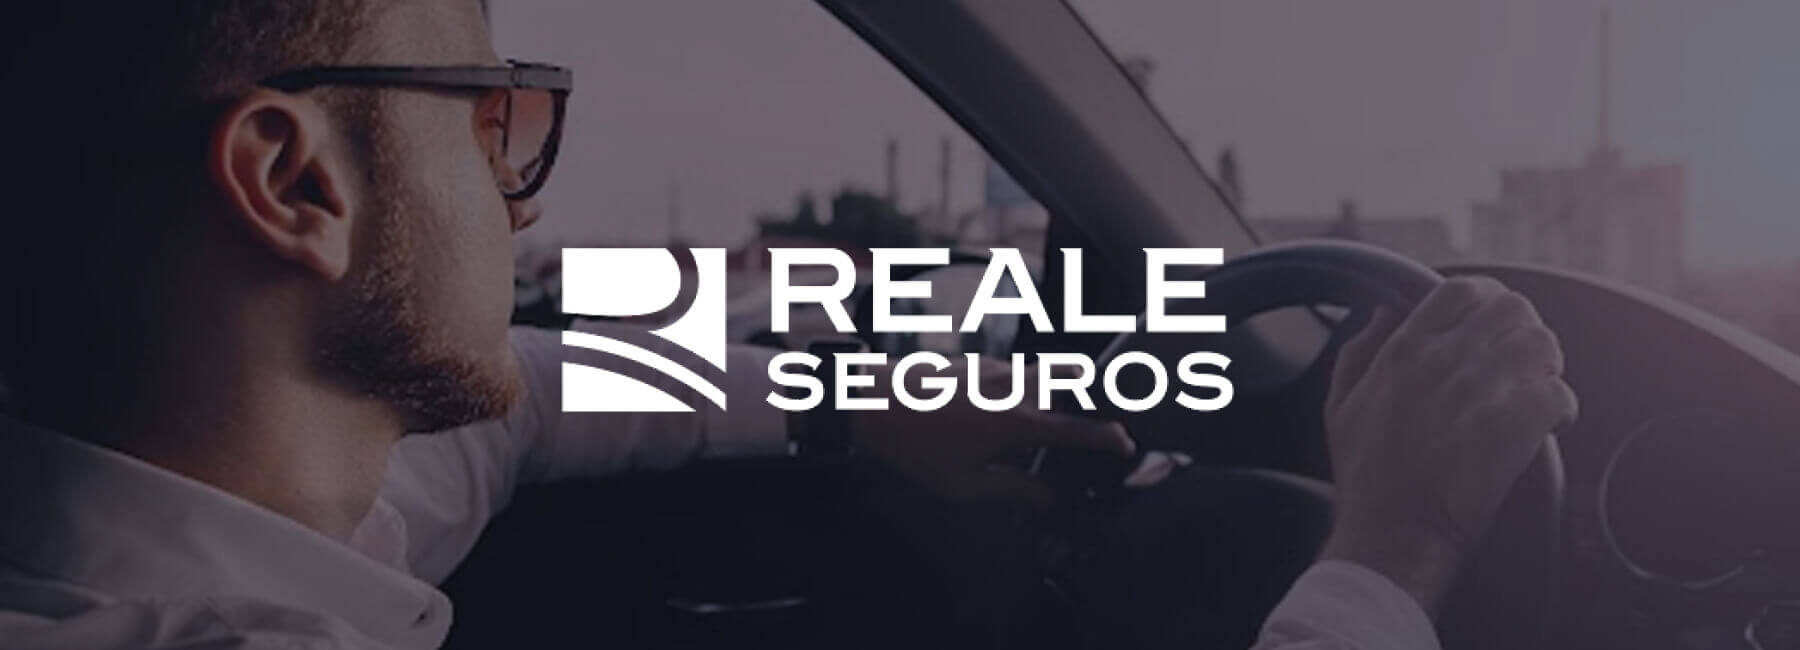 Reale Seguros’ Voice of Customer programm